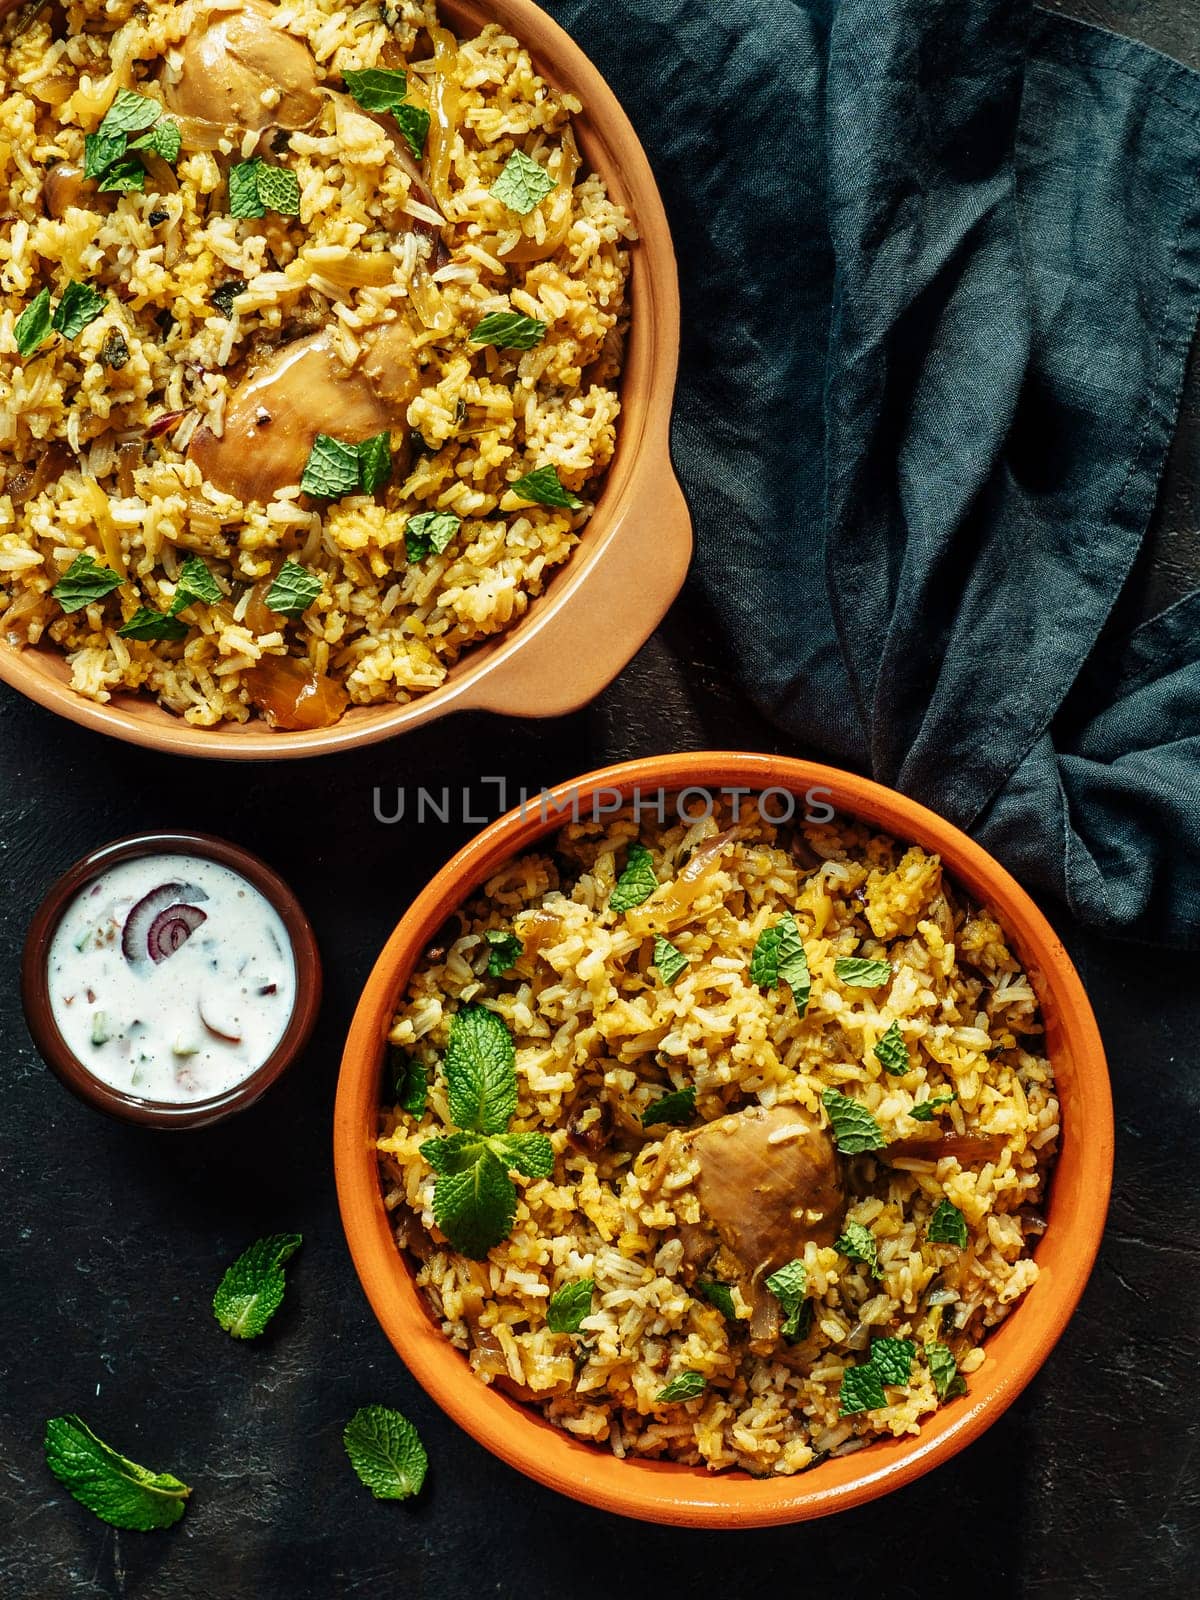 Pakistani food - biryani rice with chicken and raita yoghurt dip. Delicious hyberabadi chicken biryani in two bowl over black background. Top view or flat lay. Vertical.